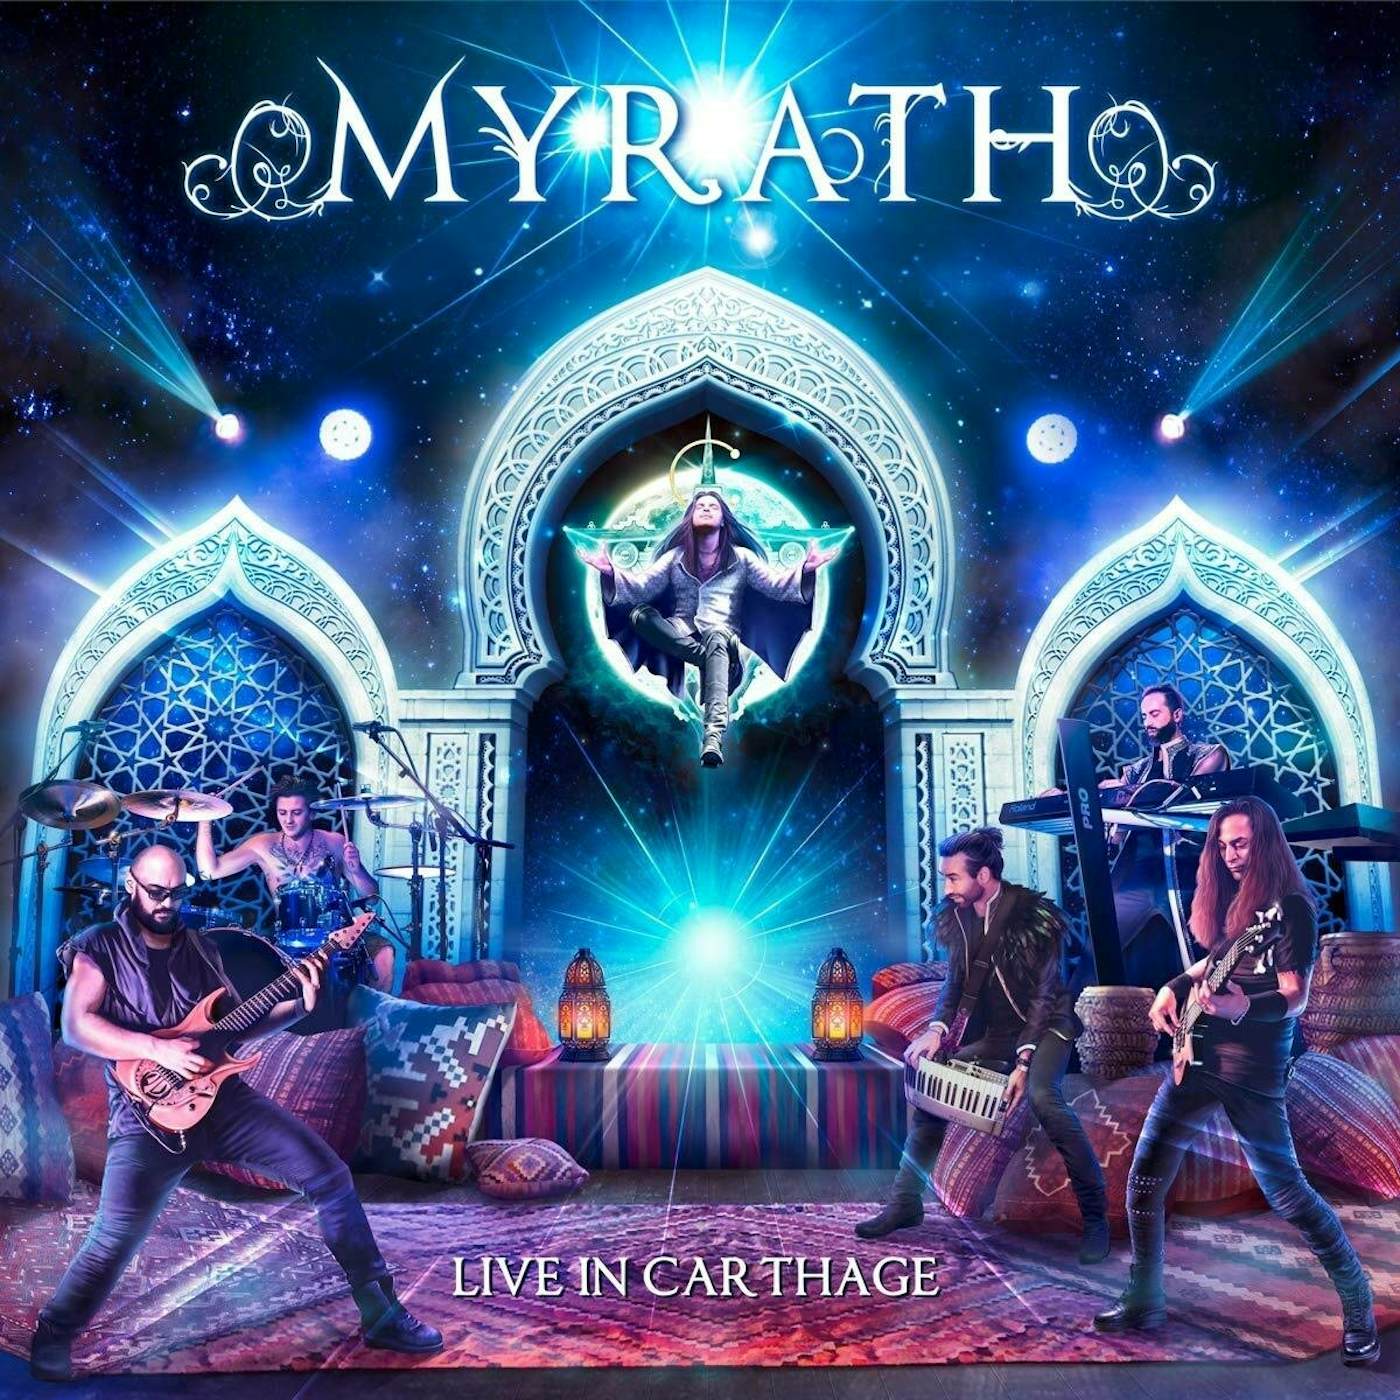 Myrath Live In Carthage (Cd/Dvd) CD